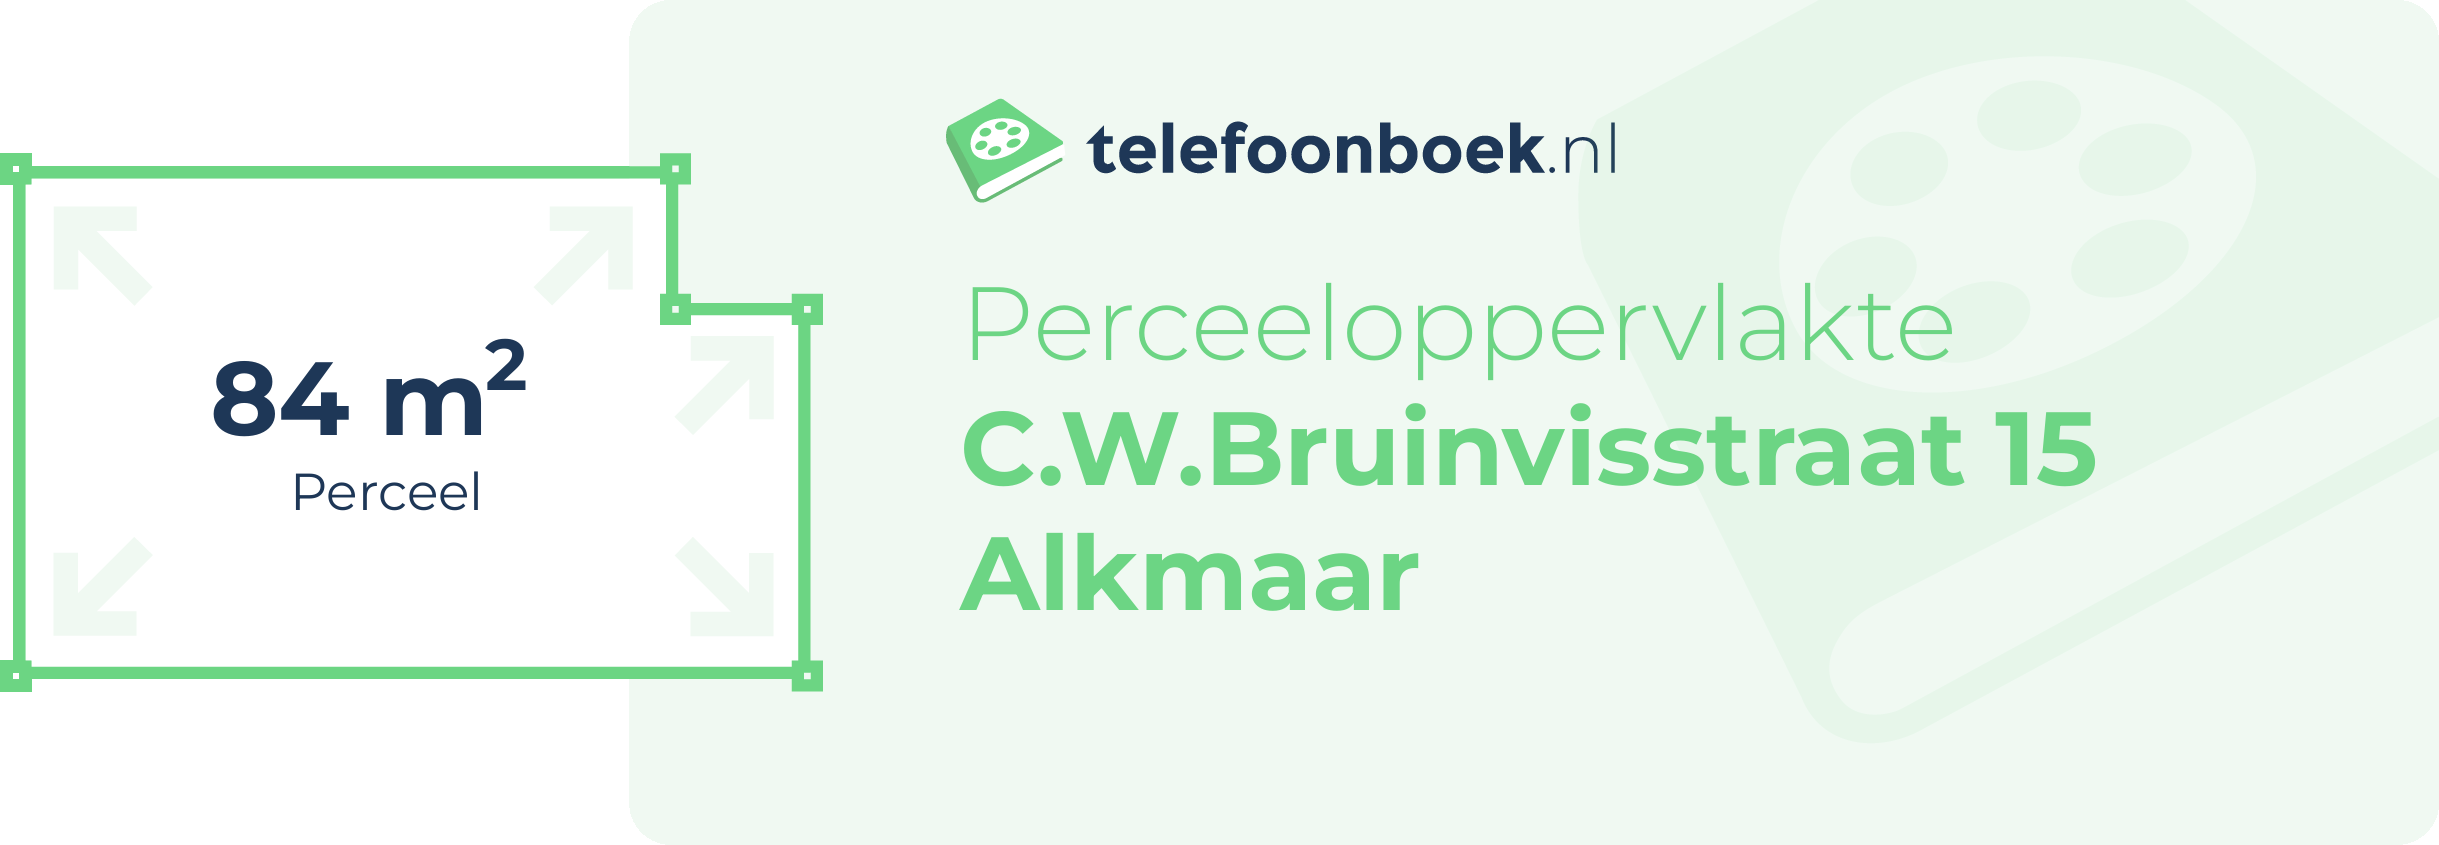 Perceeloppervlakte C.W.Bruinvisstraat 15 Alkmaar